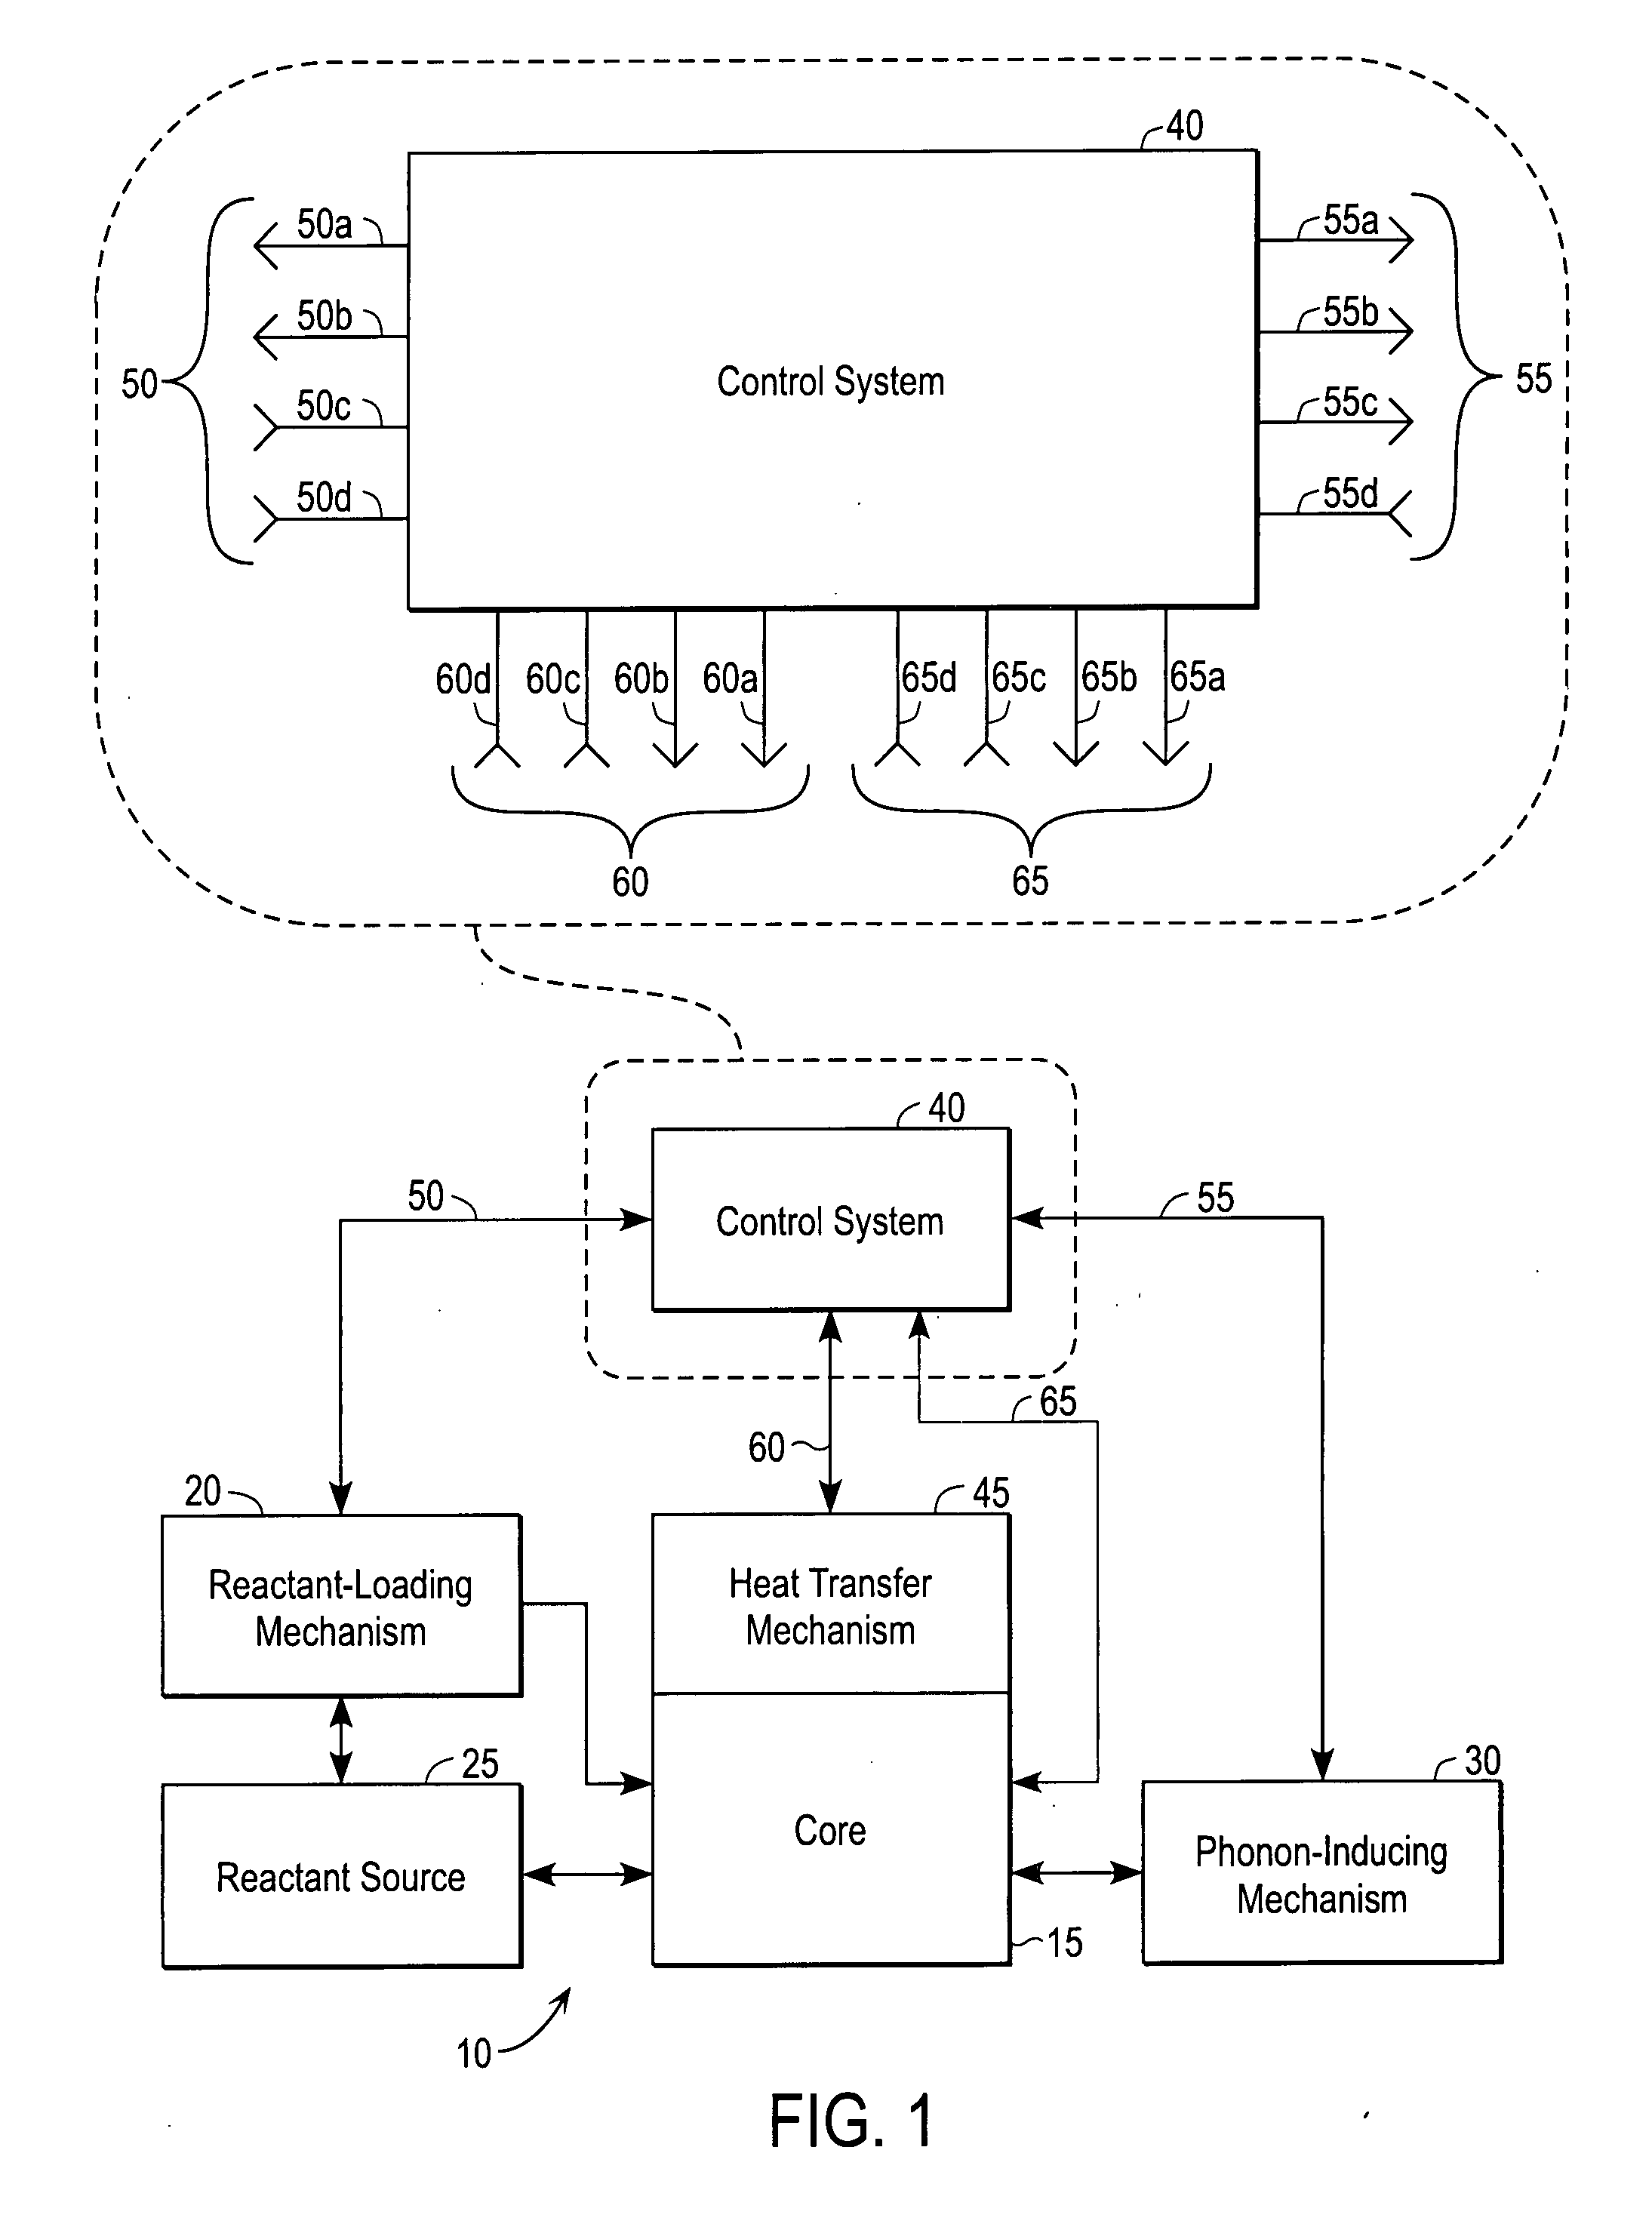 Energy generation apparatus and method